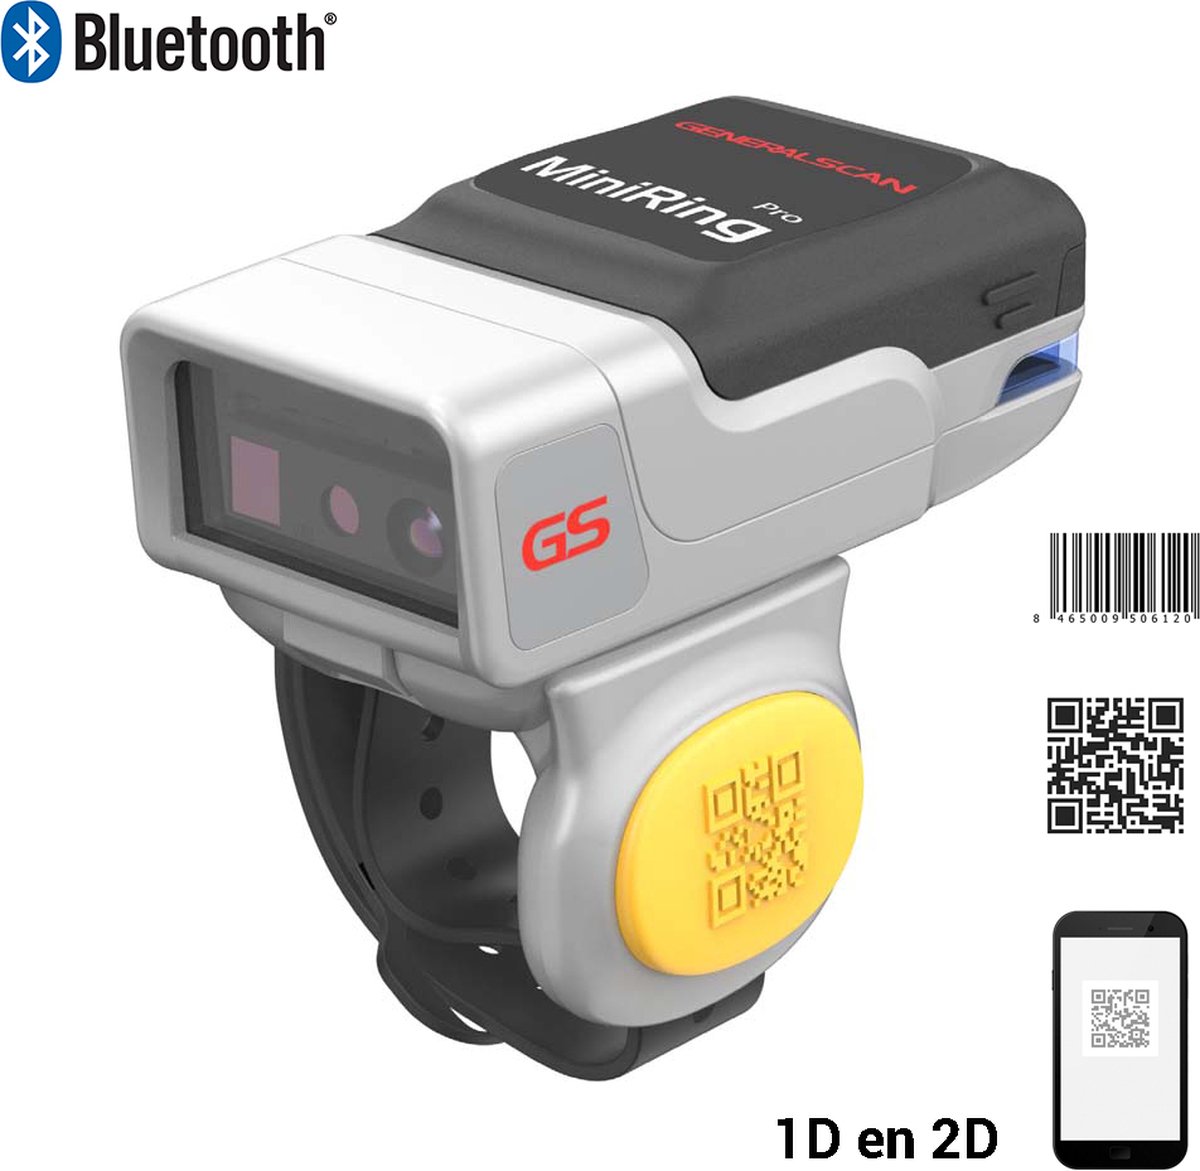 Generalscan GS R3521 - Bluetooth Barcode scanner - Ringscanner - 2D-barcodes - Handscanner